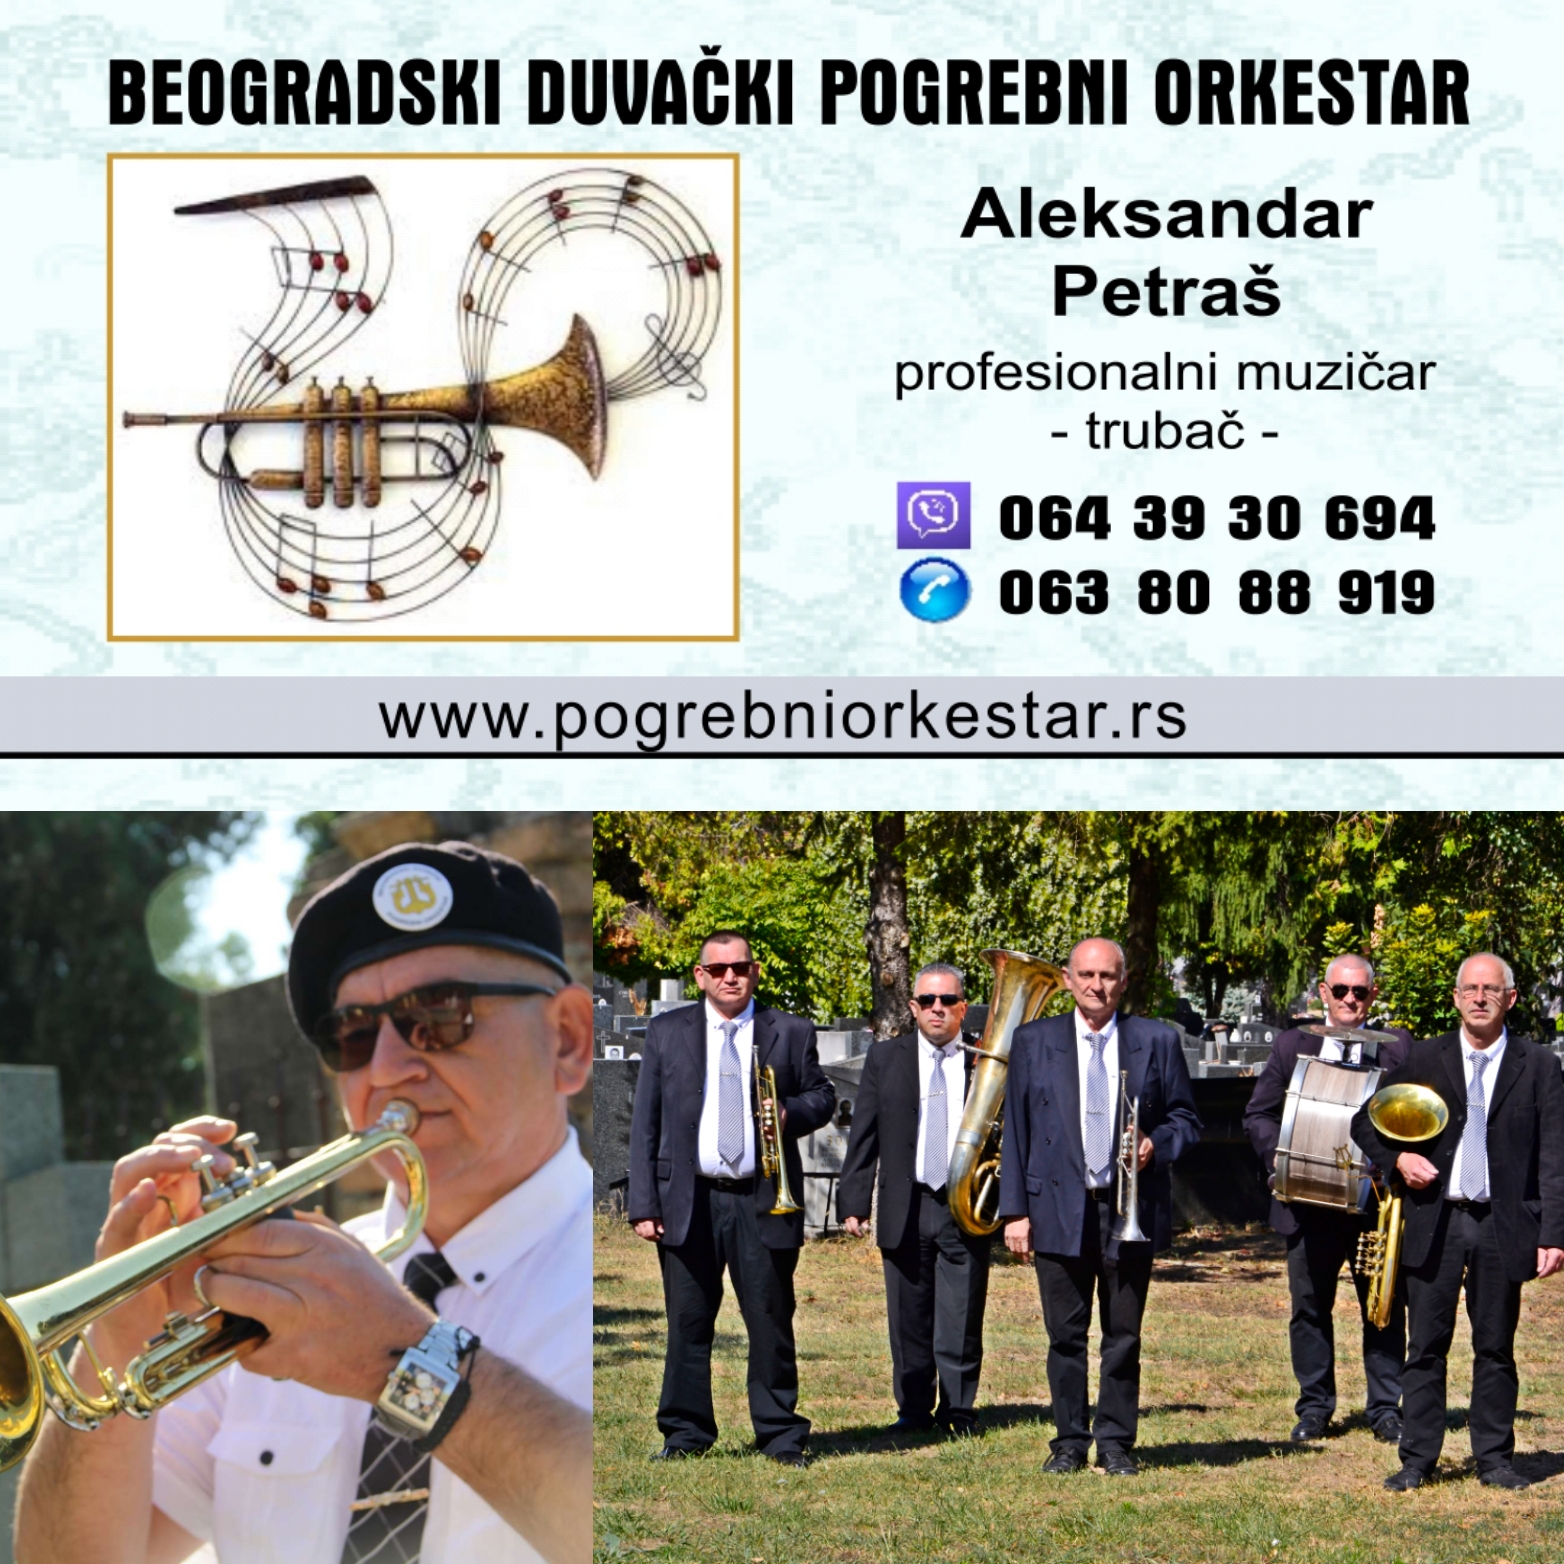 Beogradski duvacki pogrebni orkestar